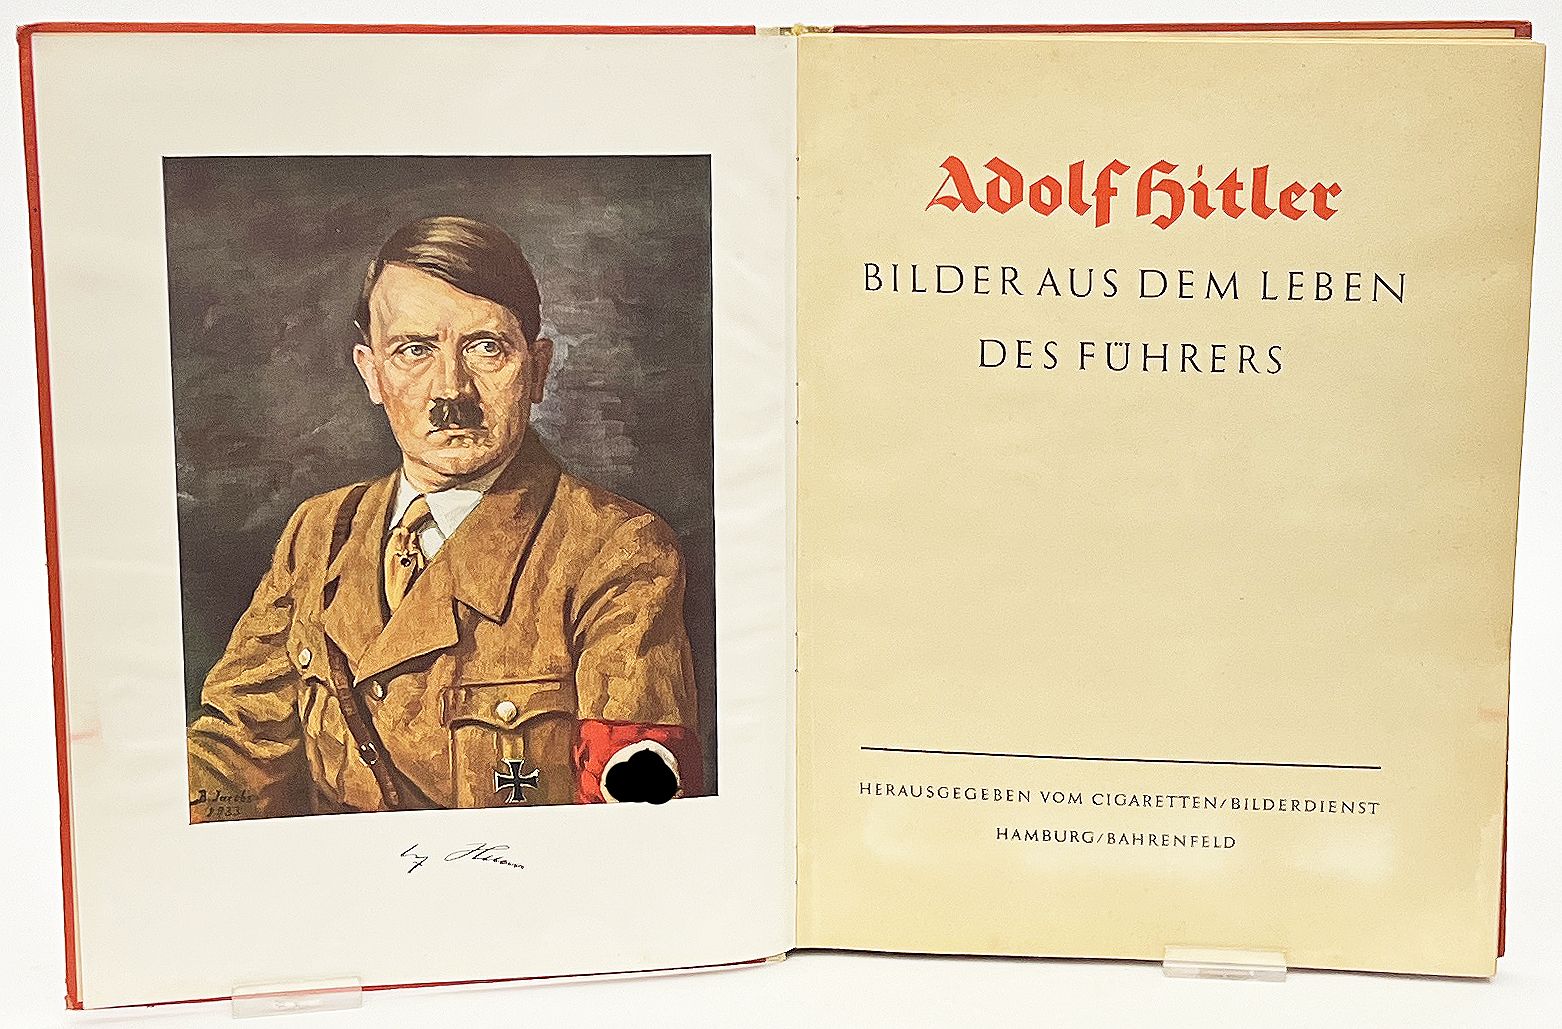 Zigaretten-Bilderalbum "Adolf Hitler".